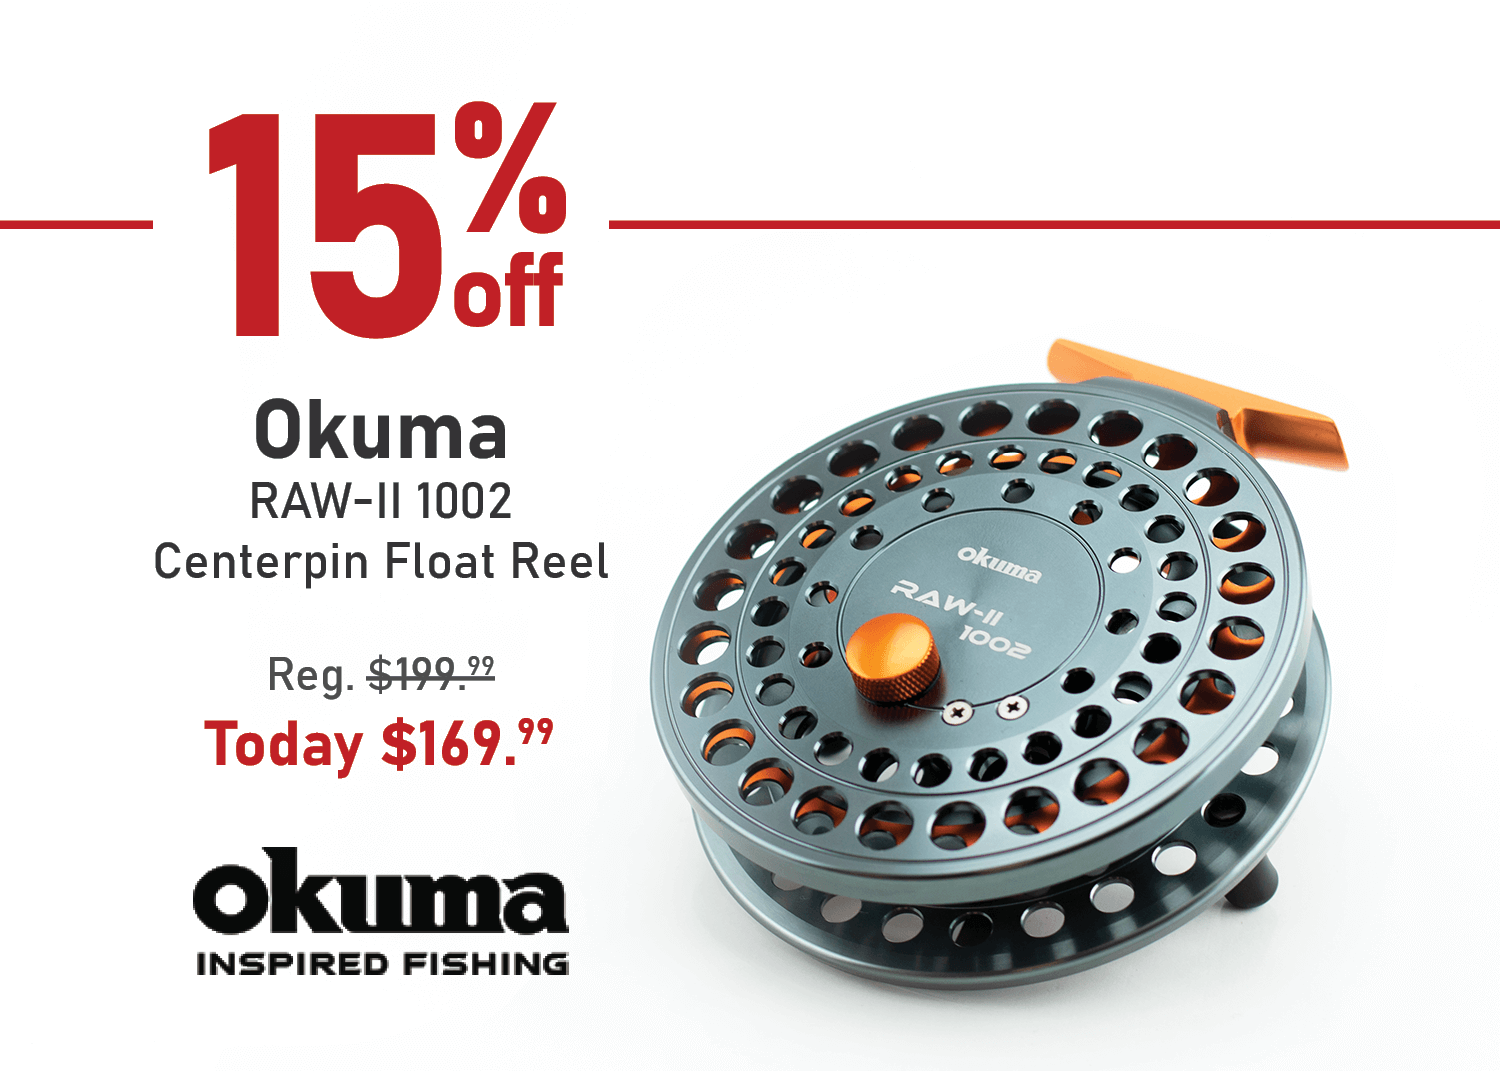 Save 15% on the Okuma RAW-II 1002 Centerpin Float Reel